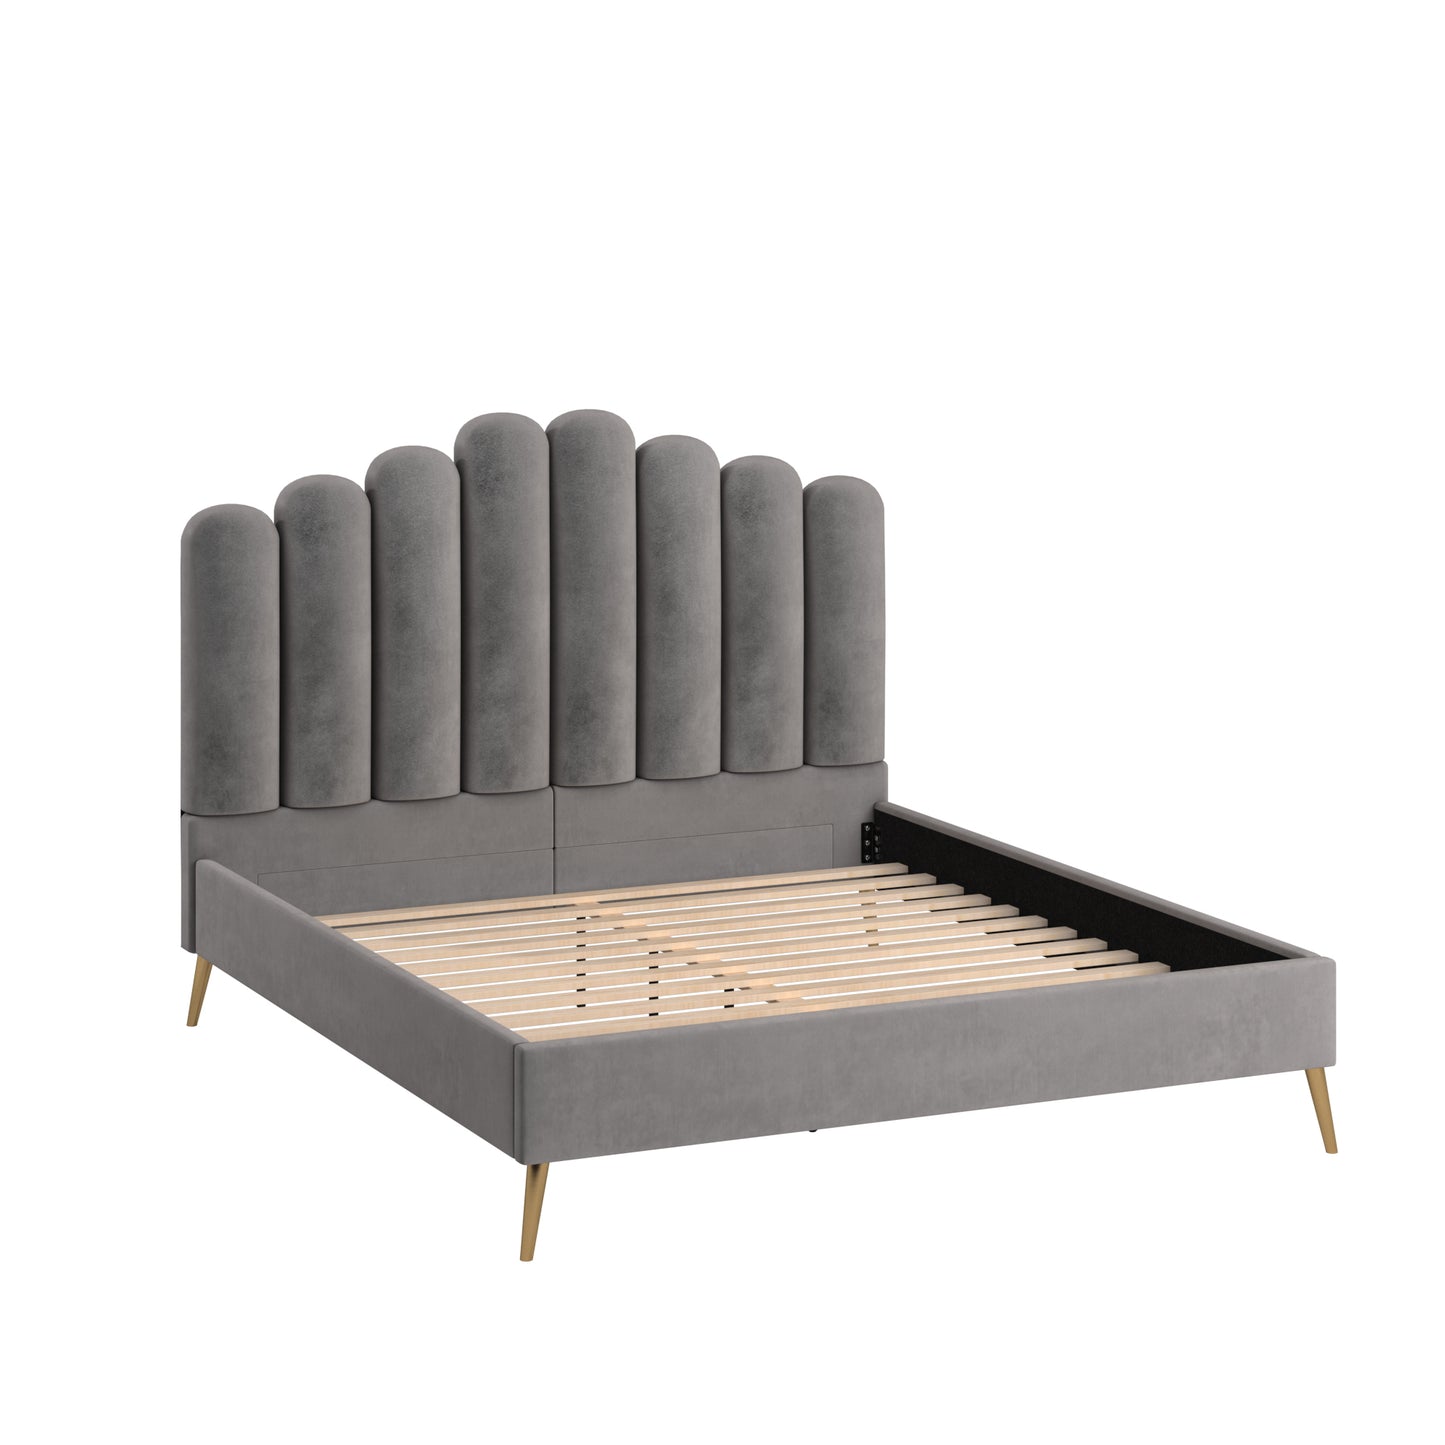 Art Deco Velvet Upholstered Platform Bed - Grey, King